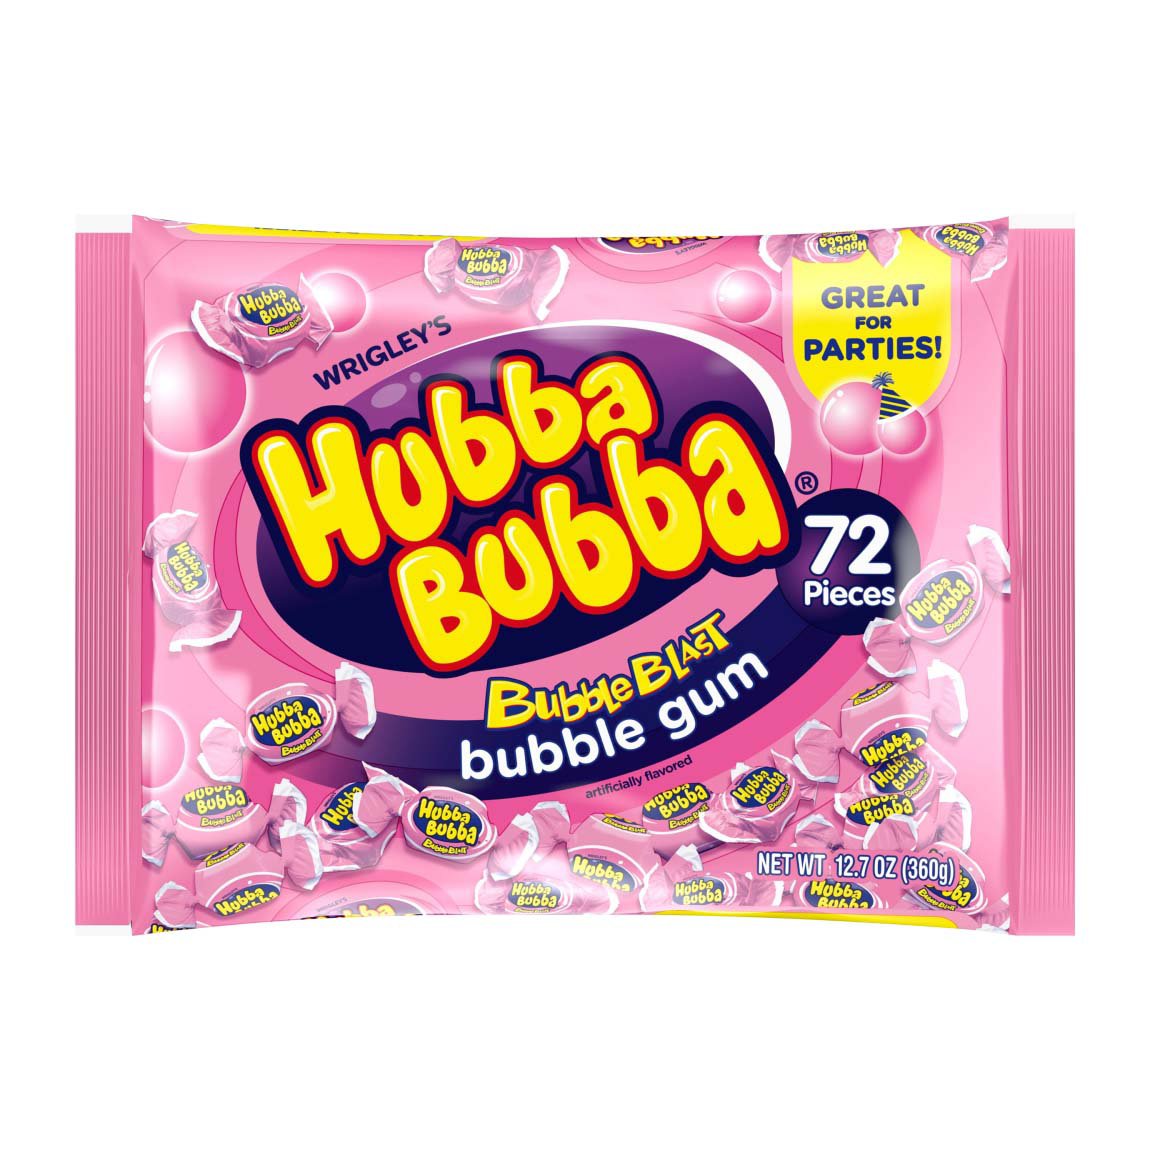 Hubba Bubba  Bubble Gum - WholesaleYummygift